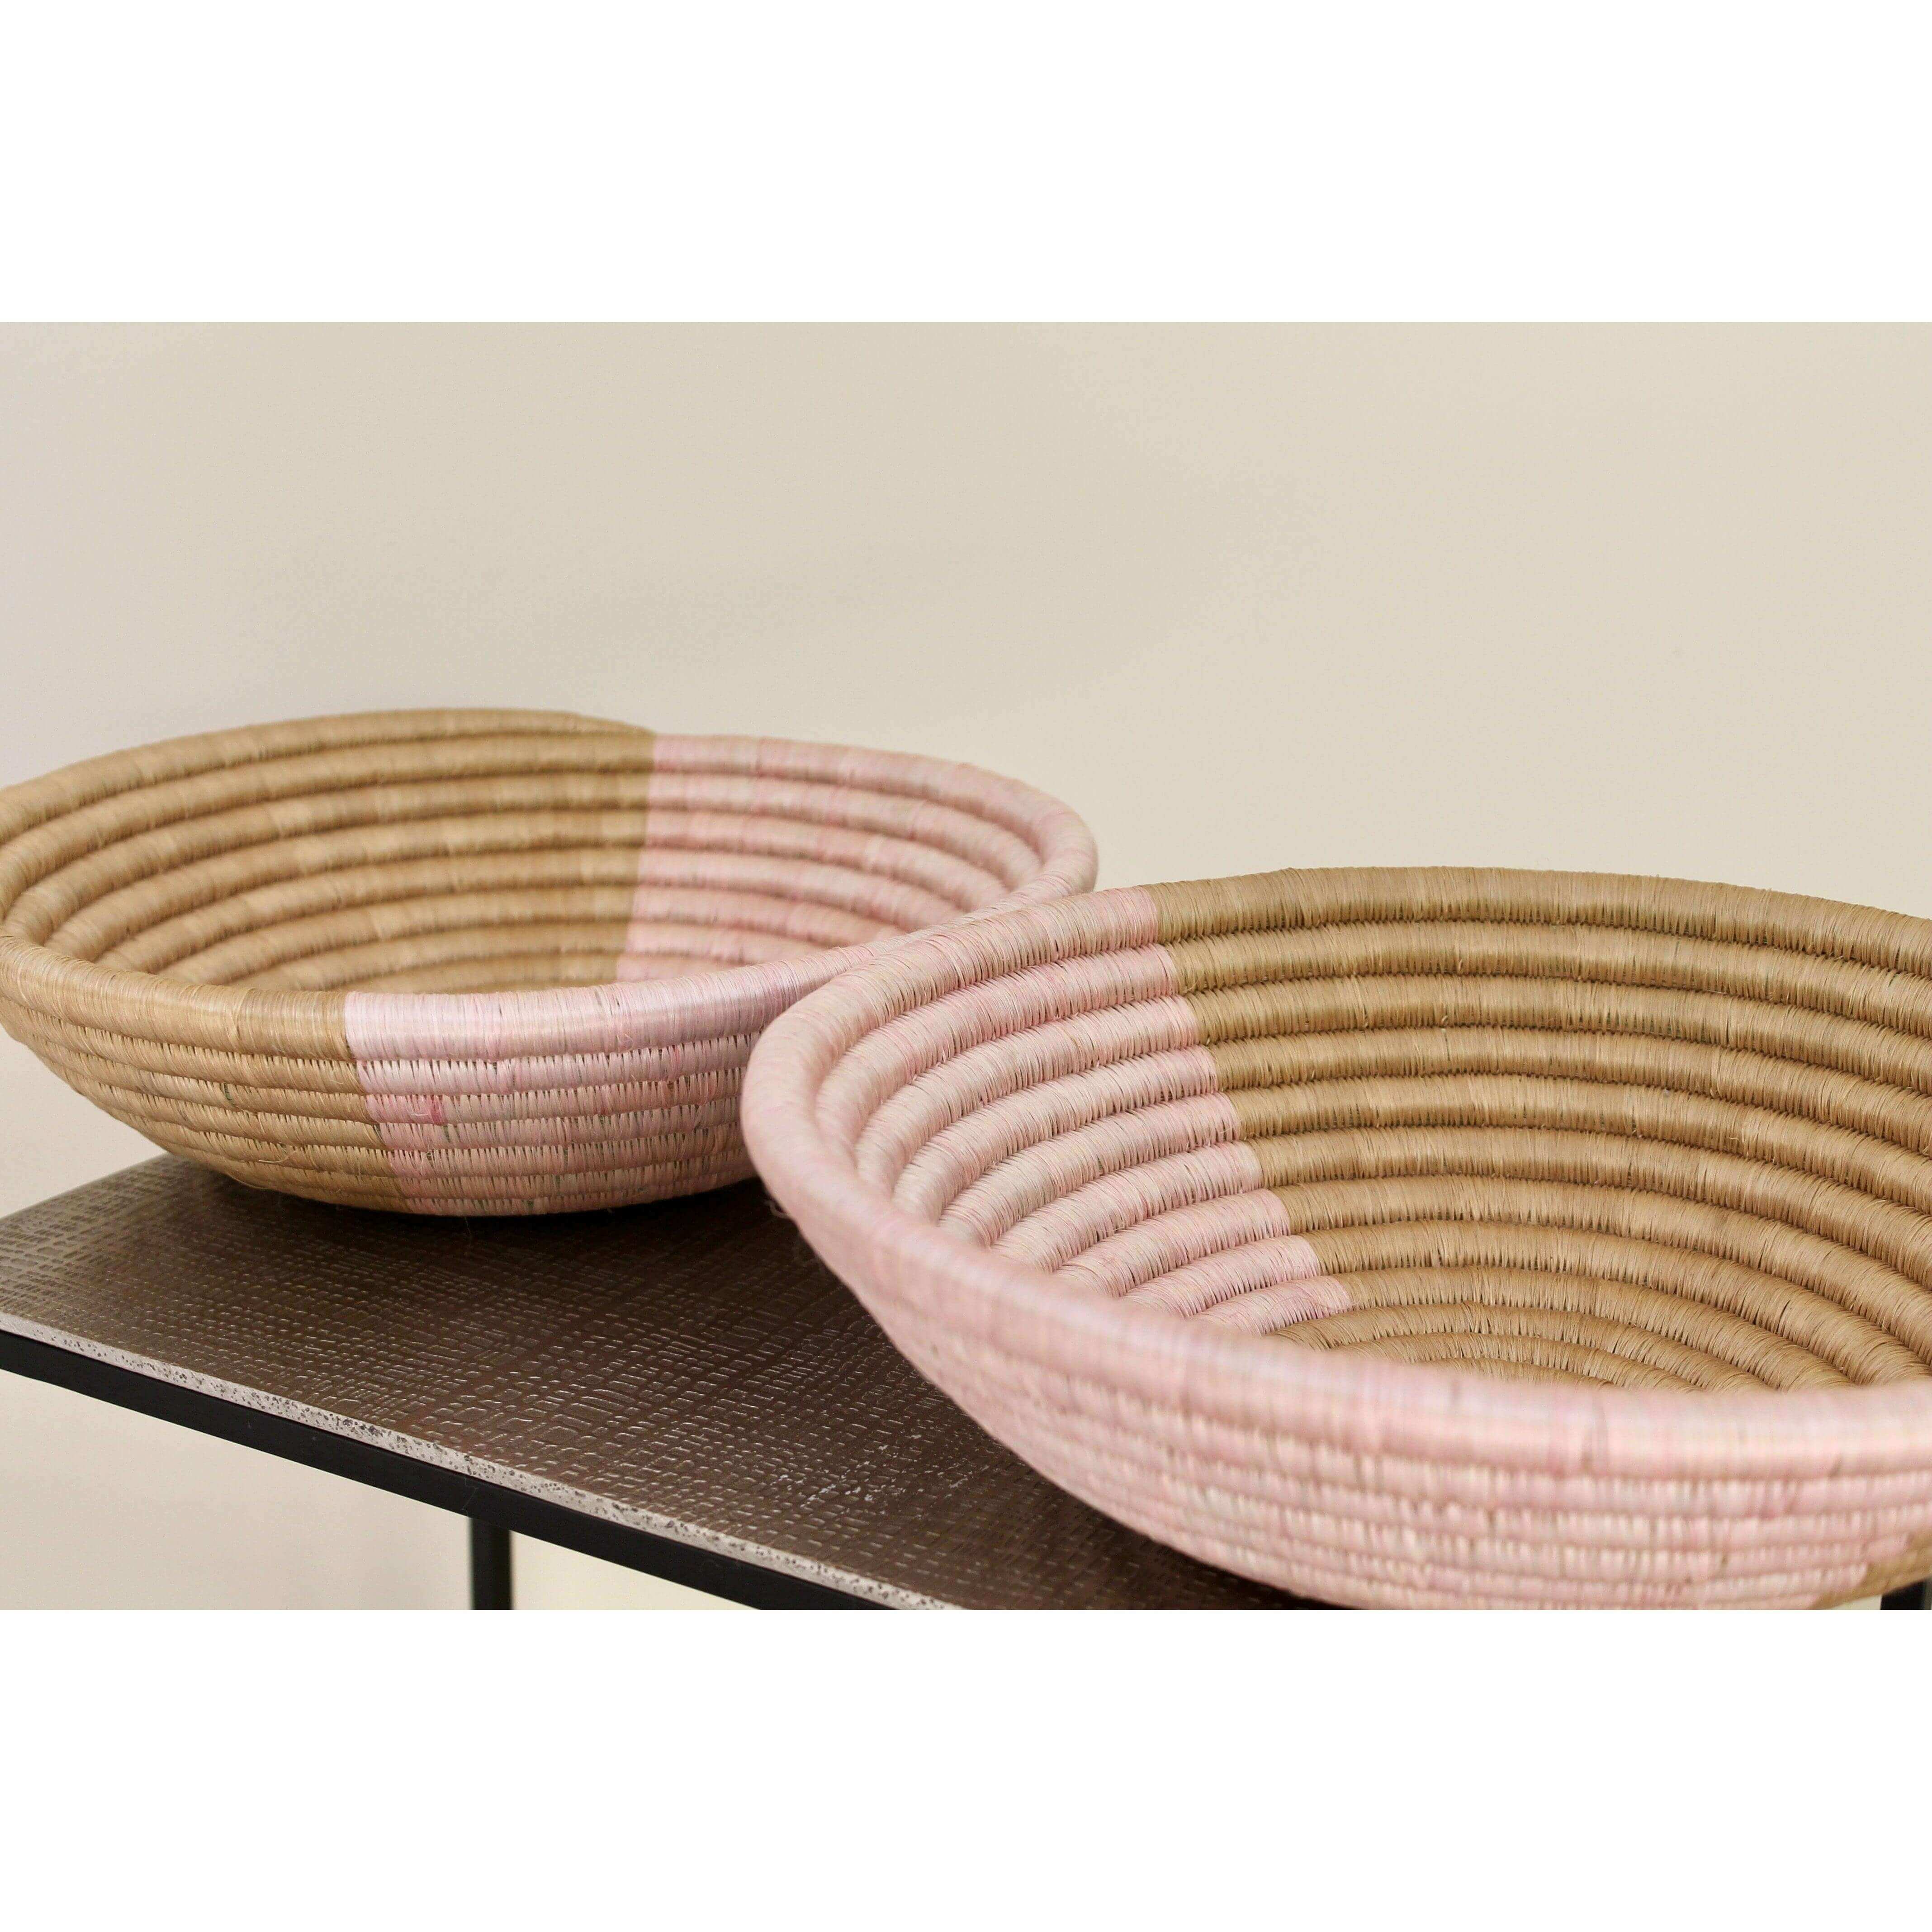 Blush pink woven bowls as home decor